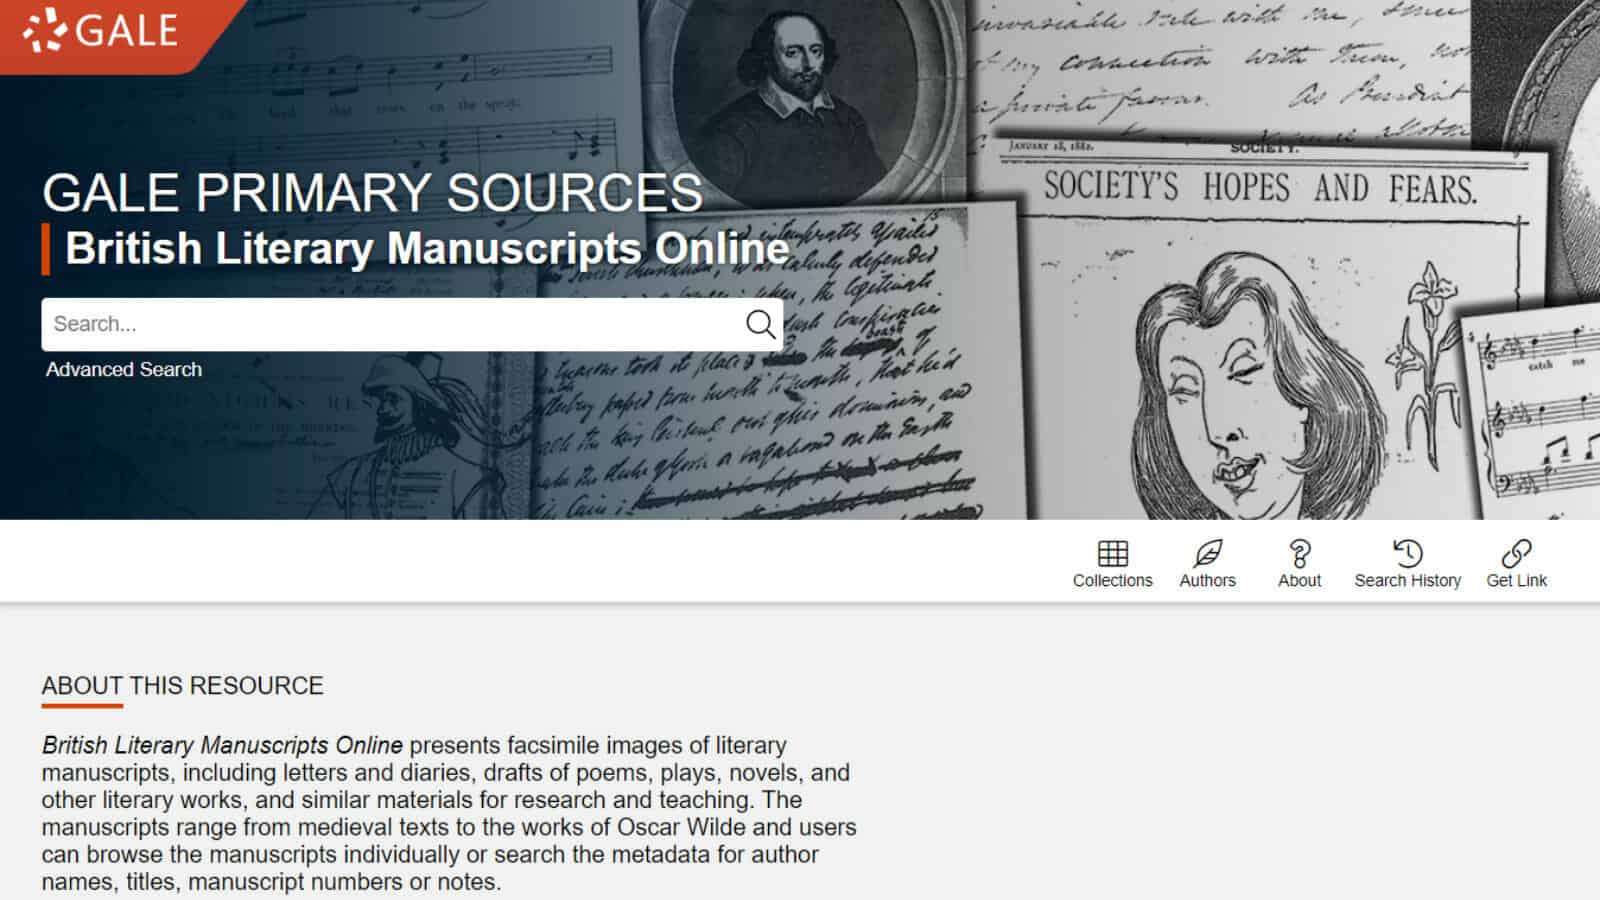 British Literary Manuscripts Online interface